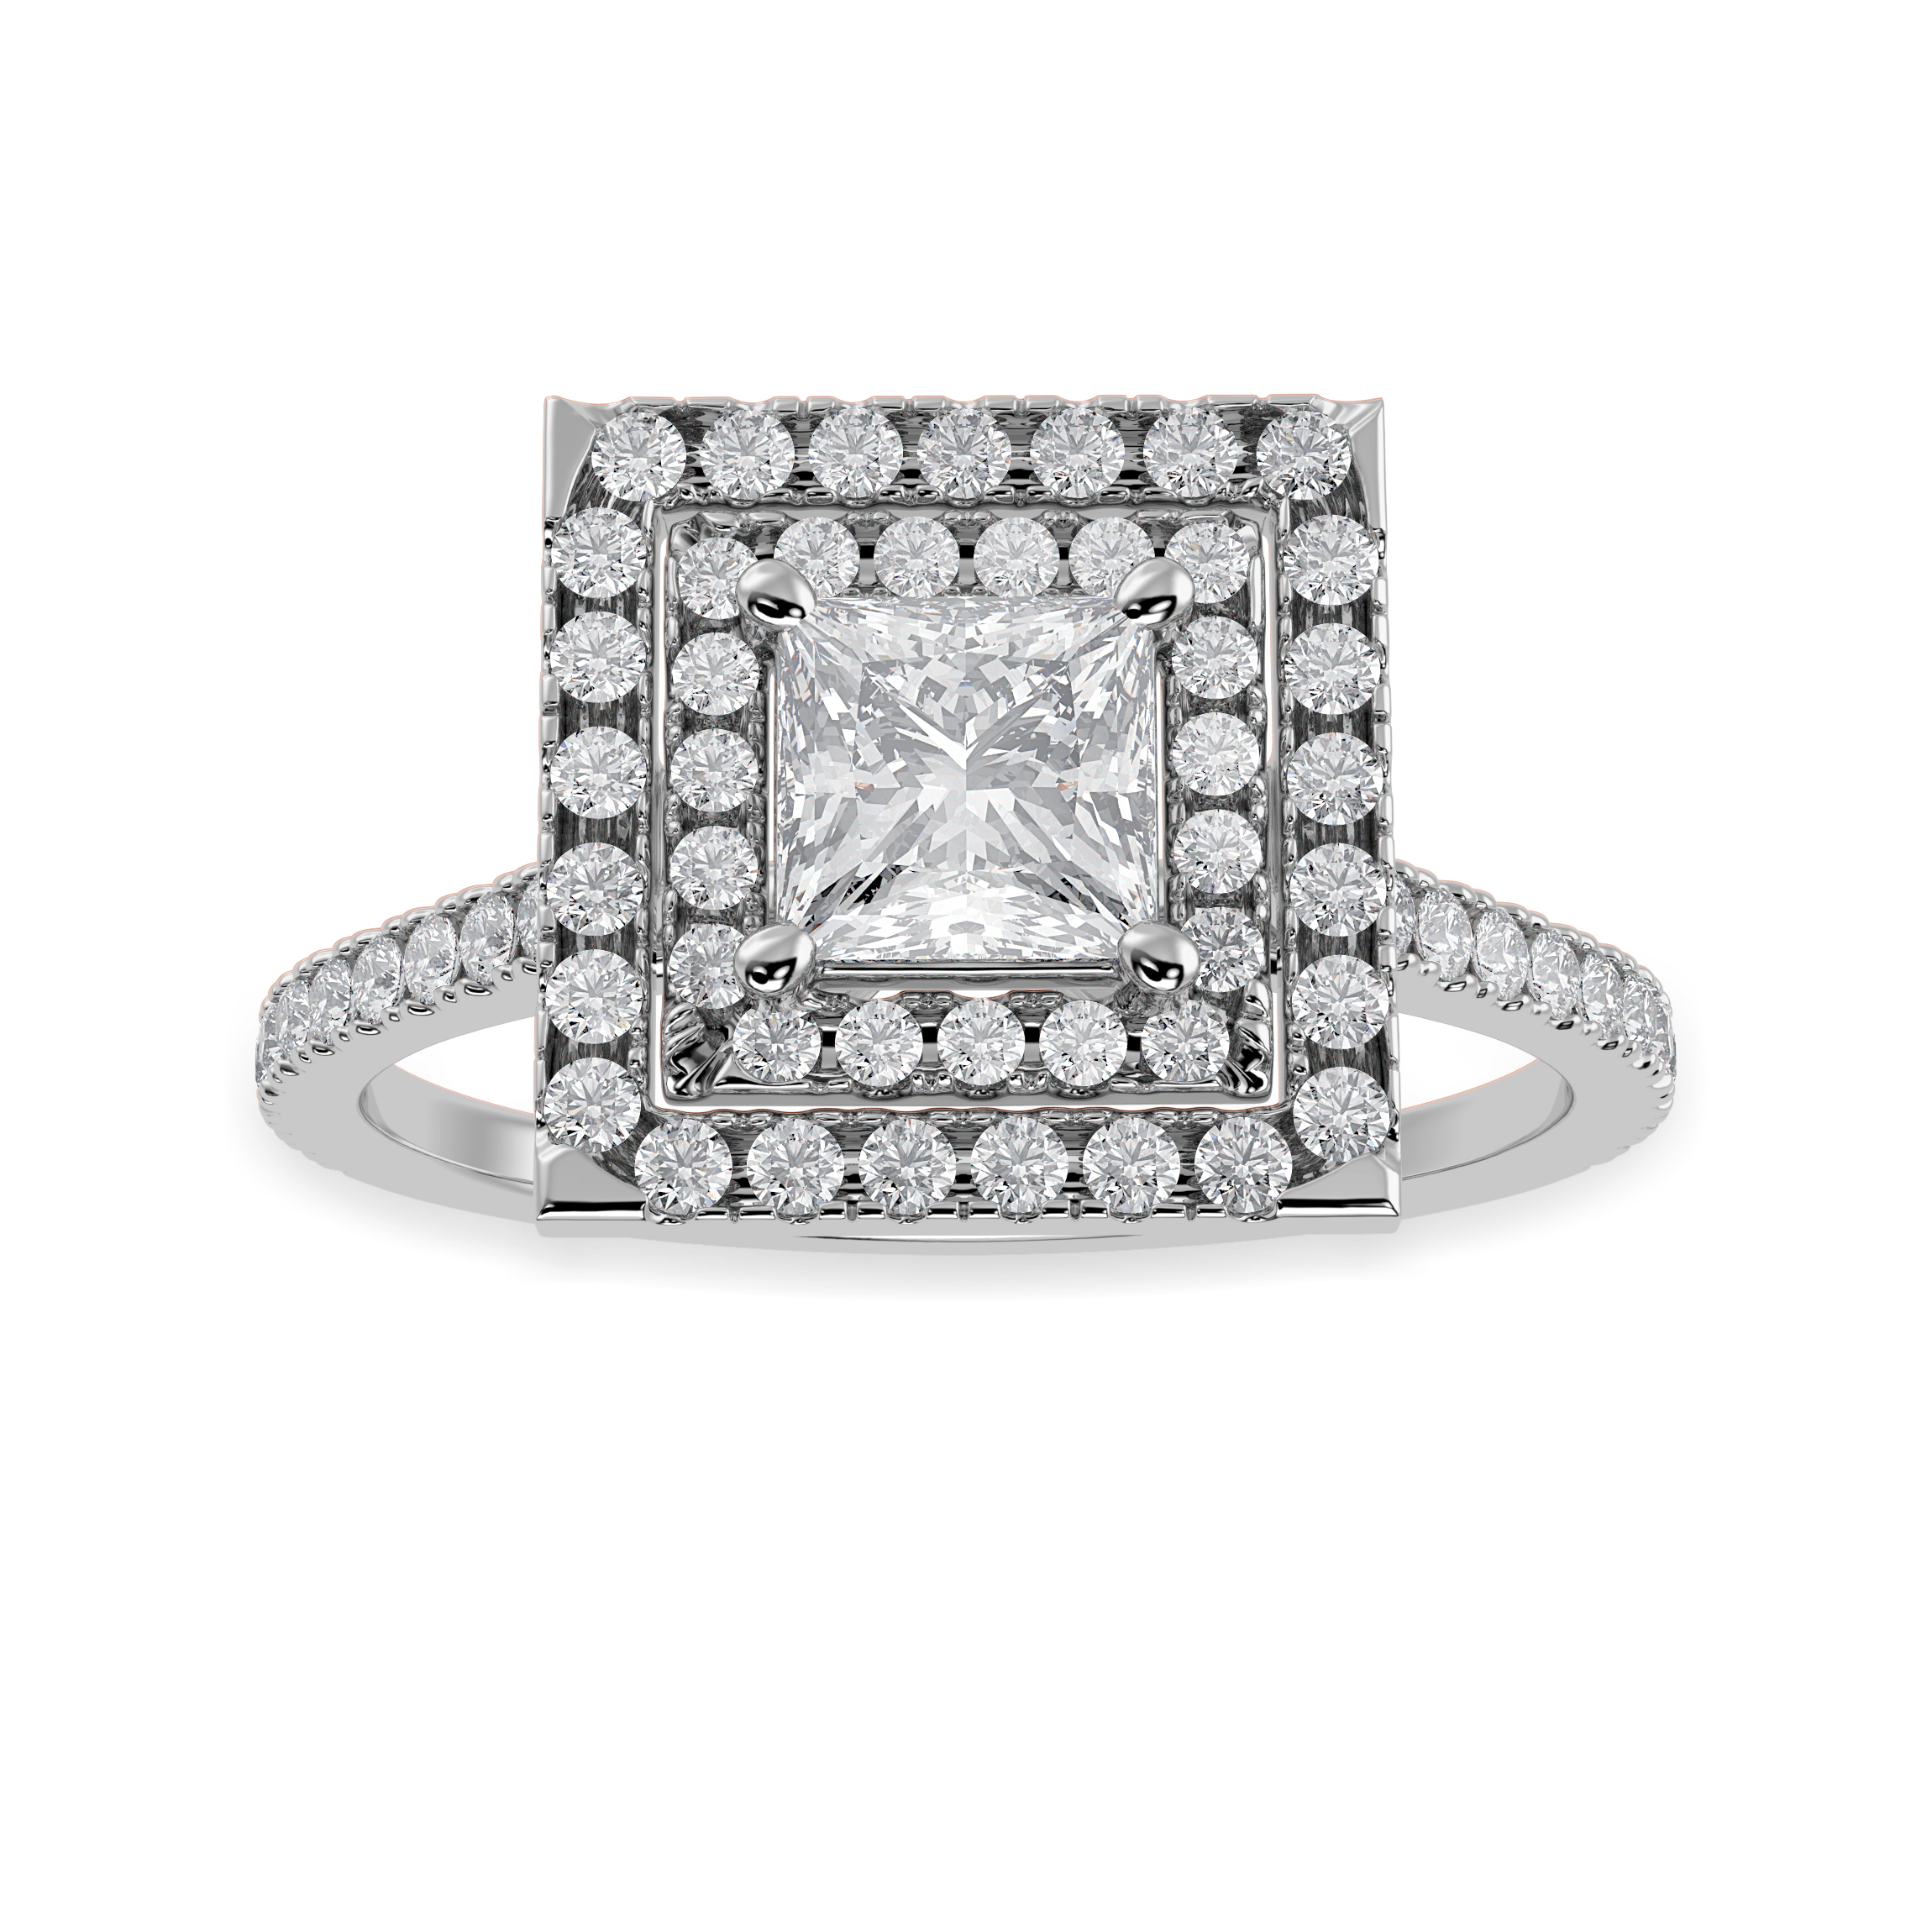 2.6ct Princess Cut Diamond Double Halo Frame Engagement Ring 14k White Gold  Over | eBay